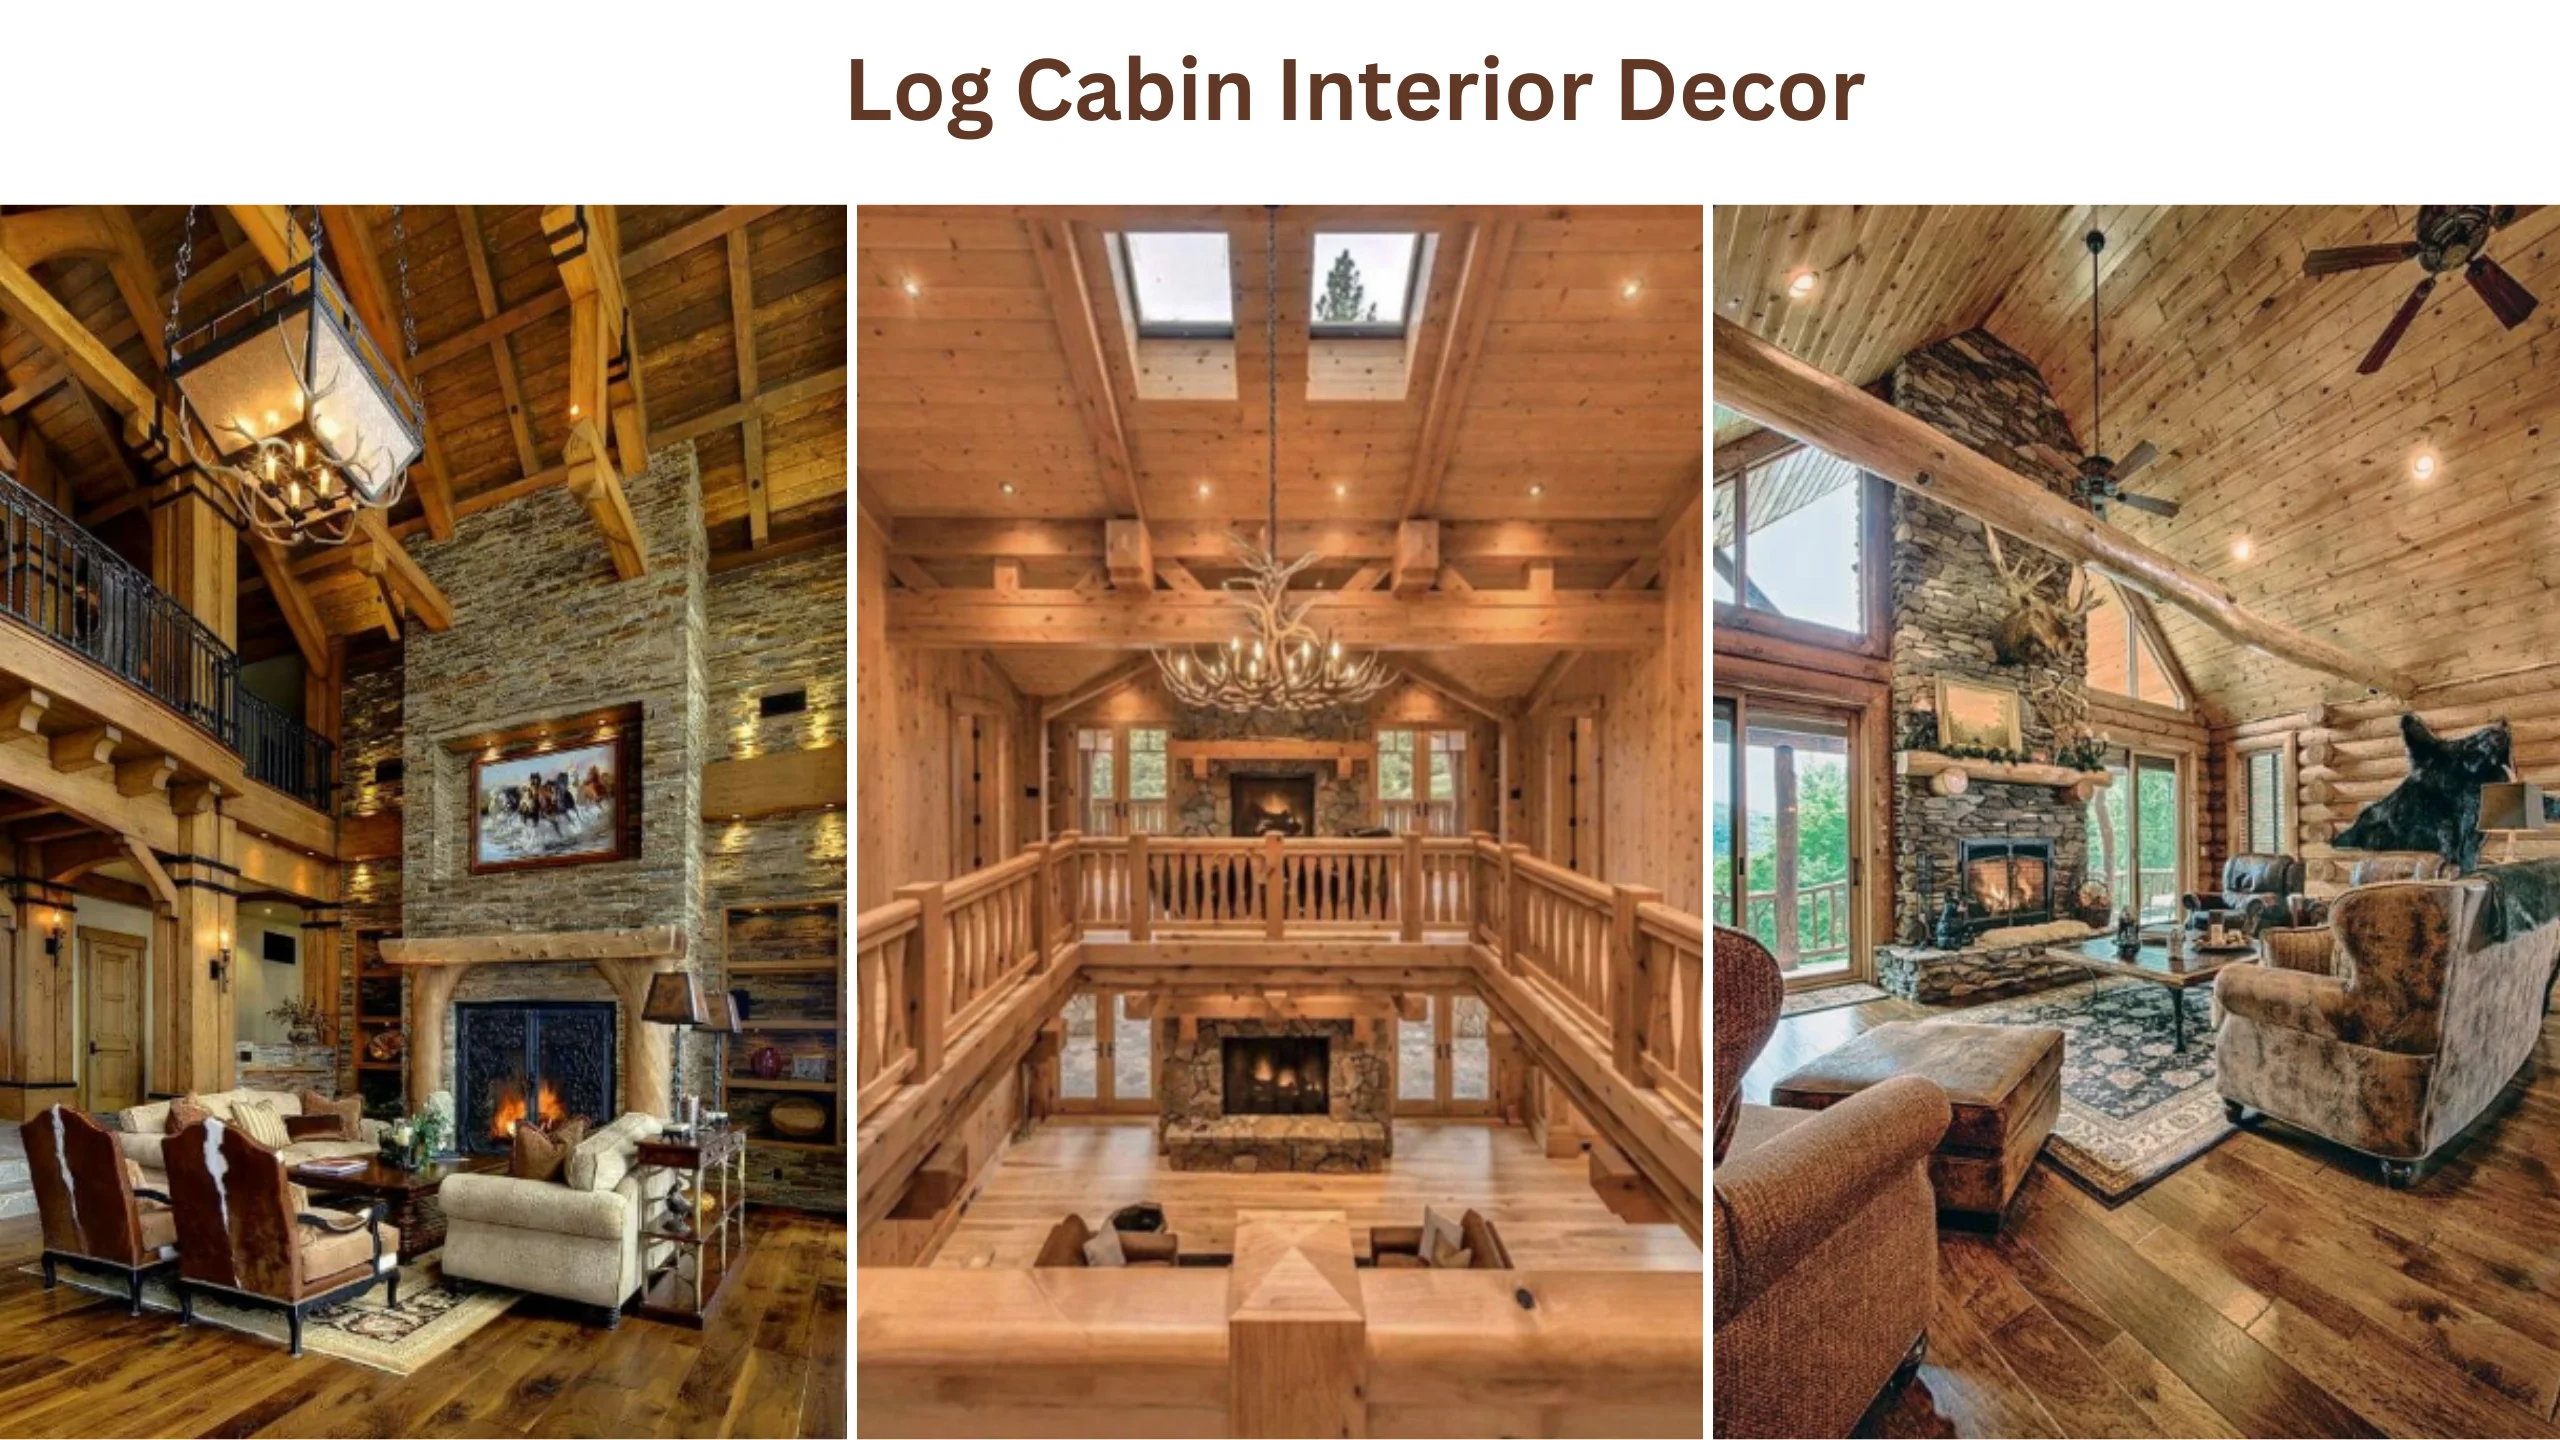 Log cabin interior decor 1